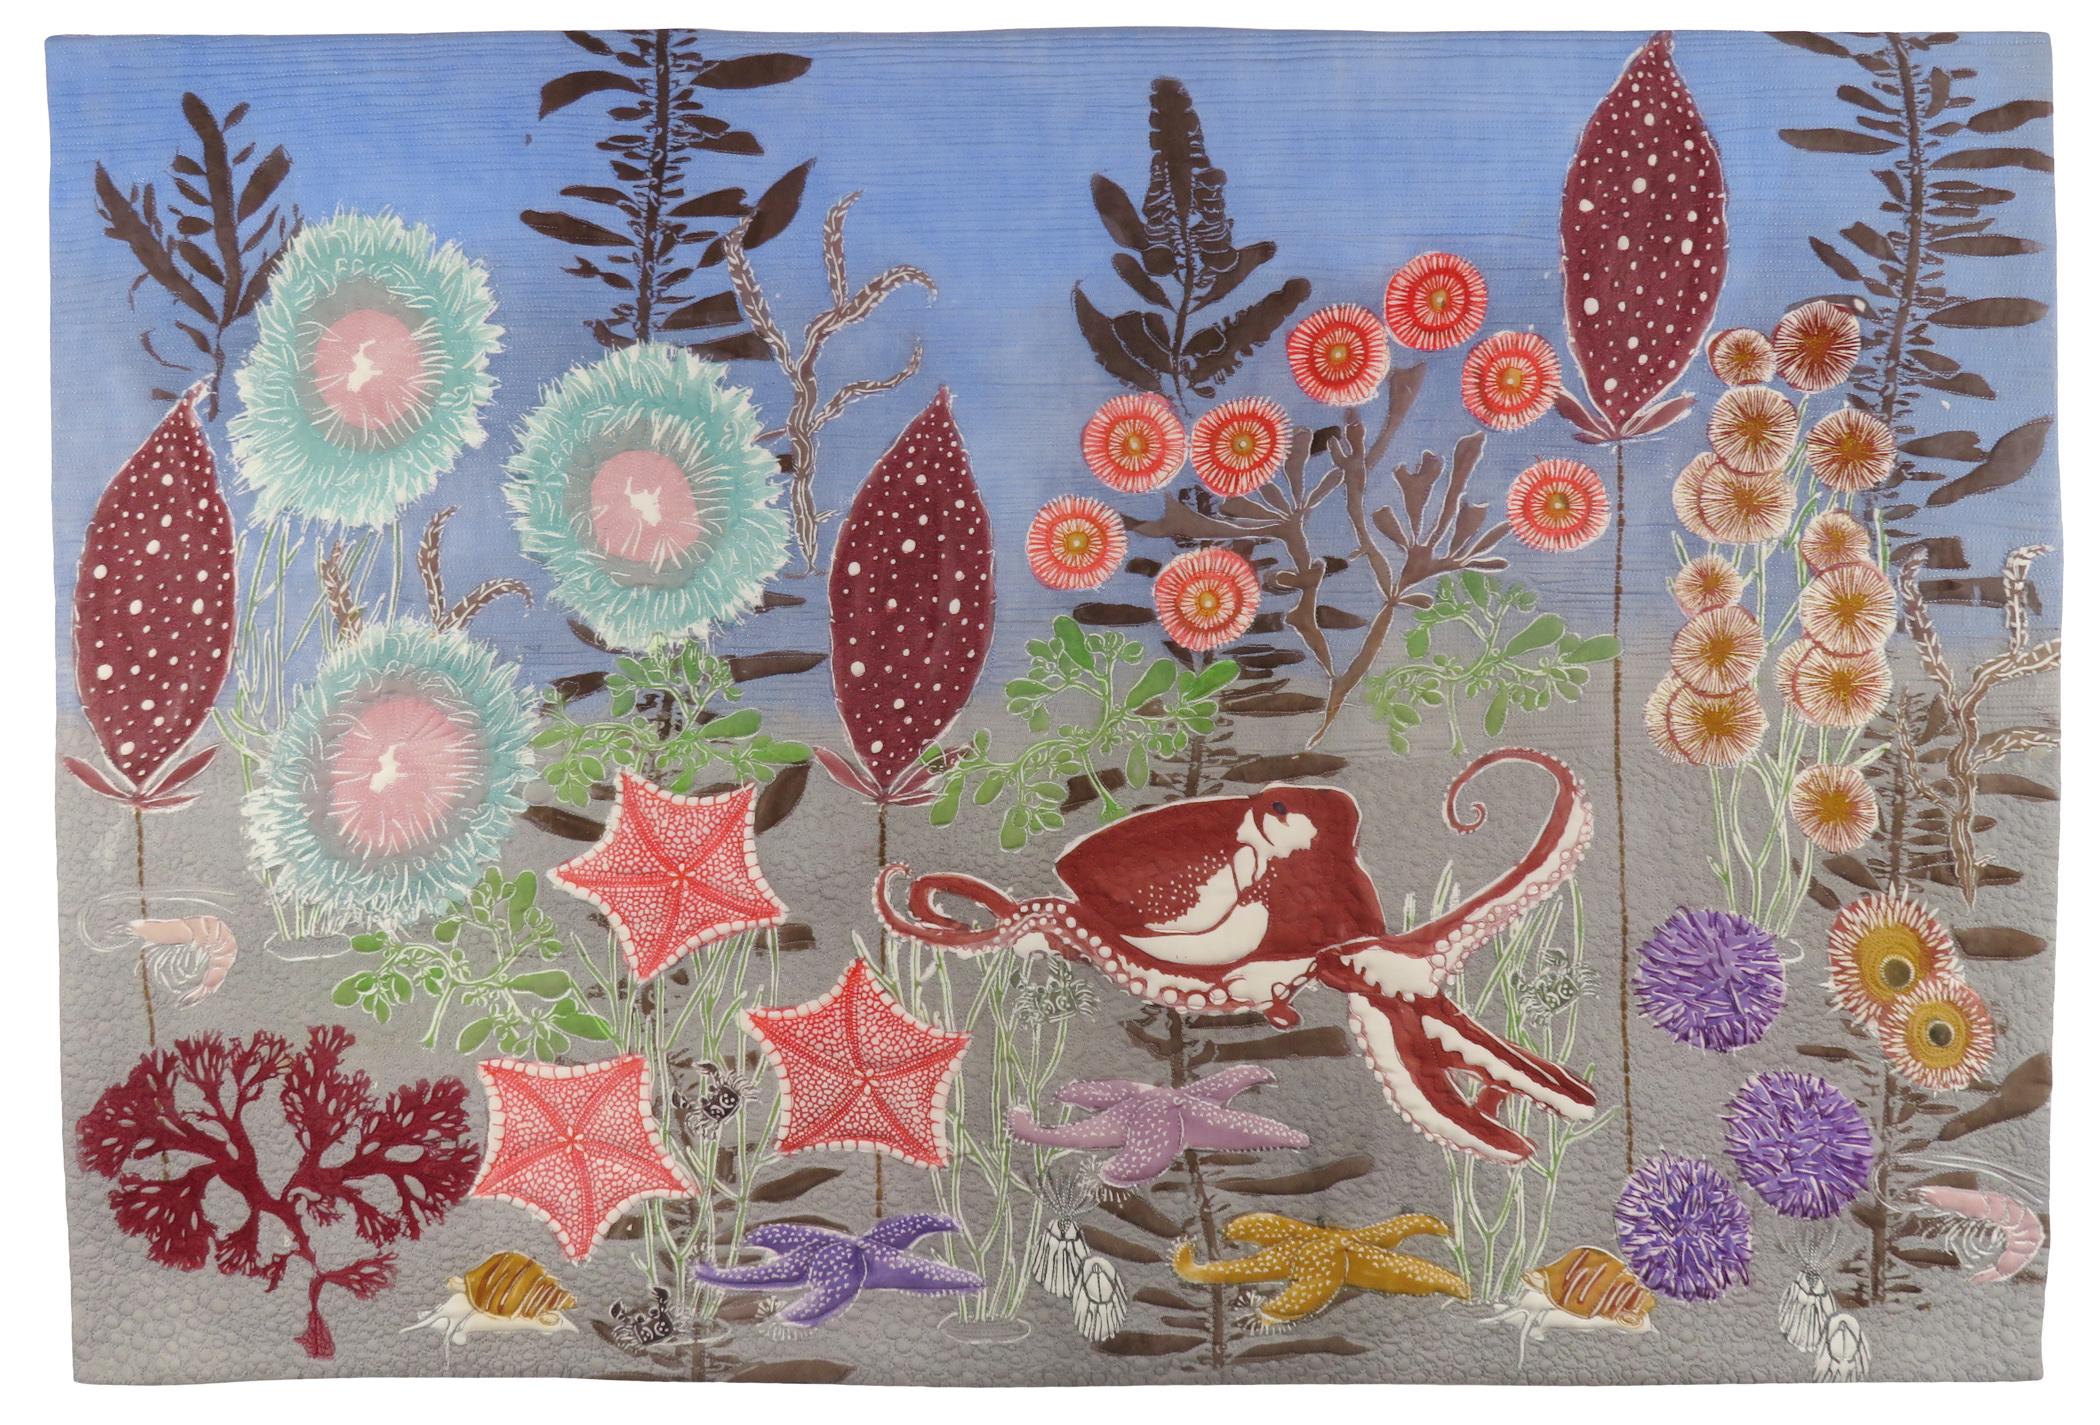 Karen I. Miller - The Octopus's Garden